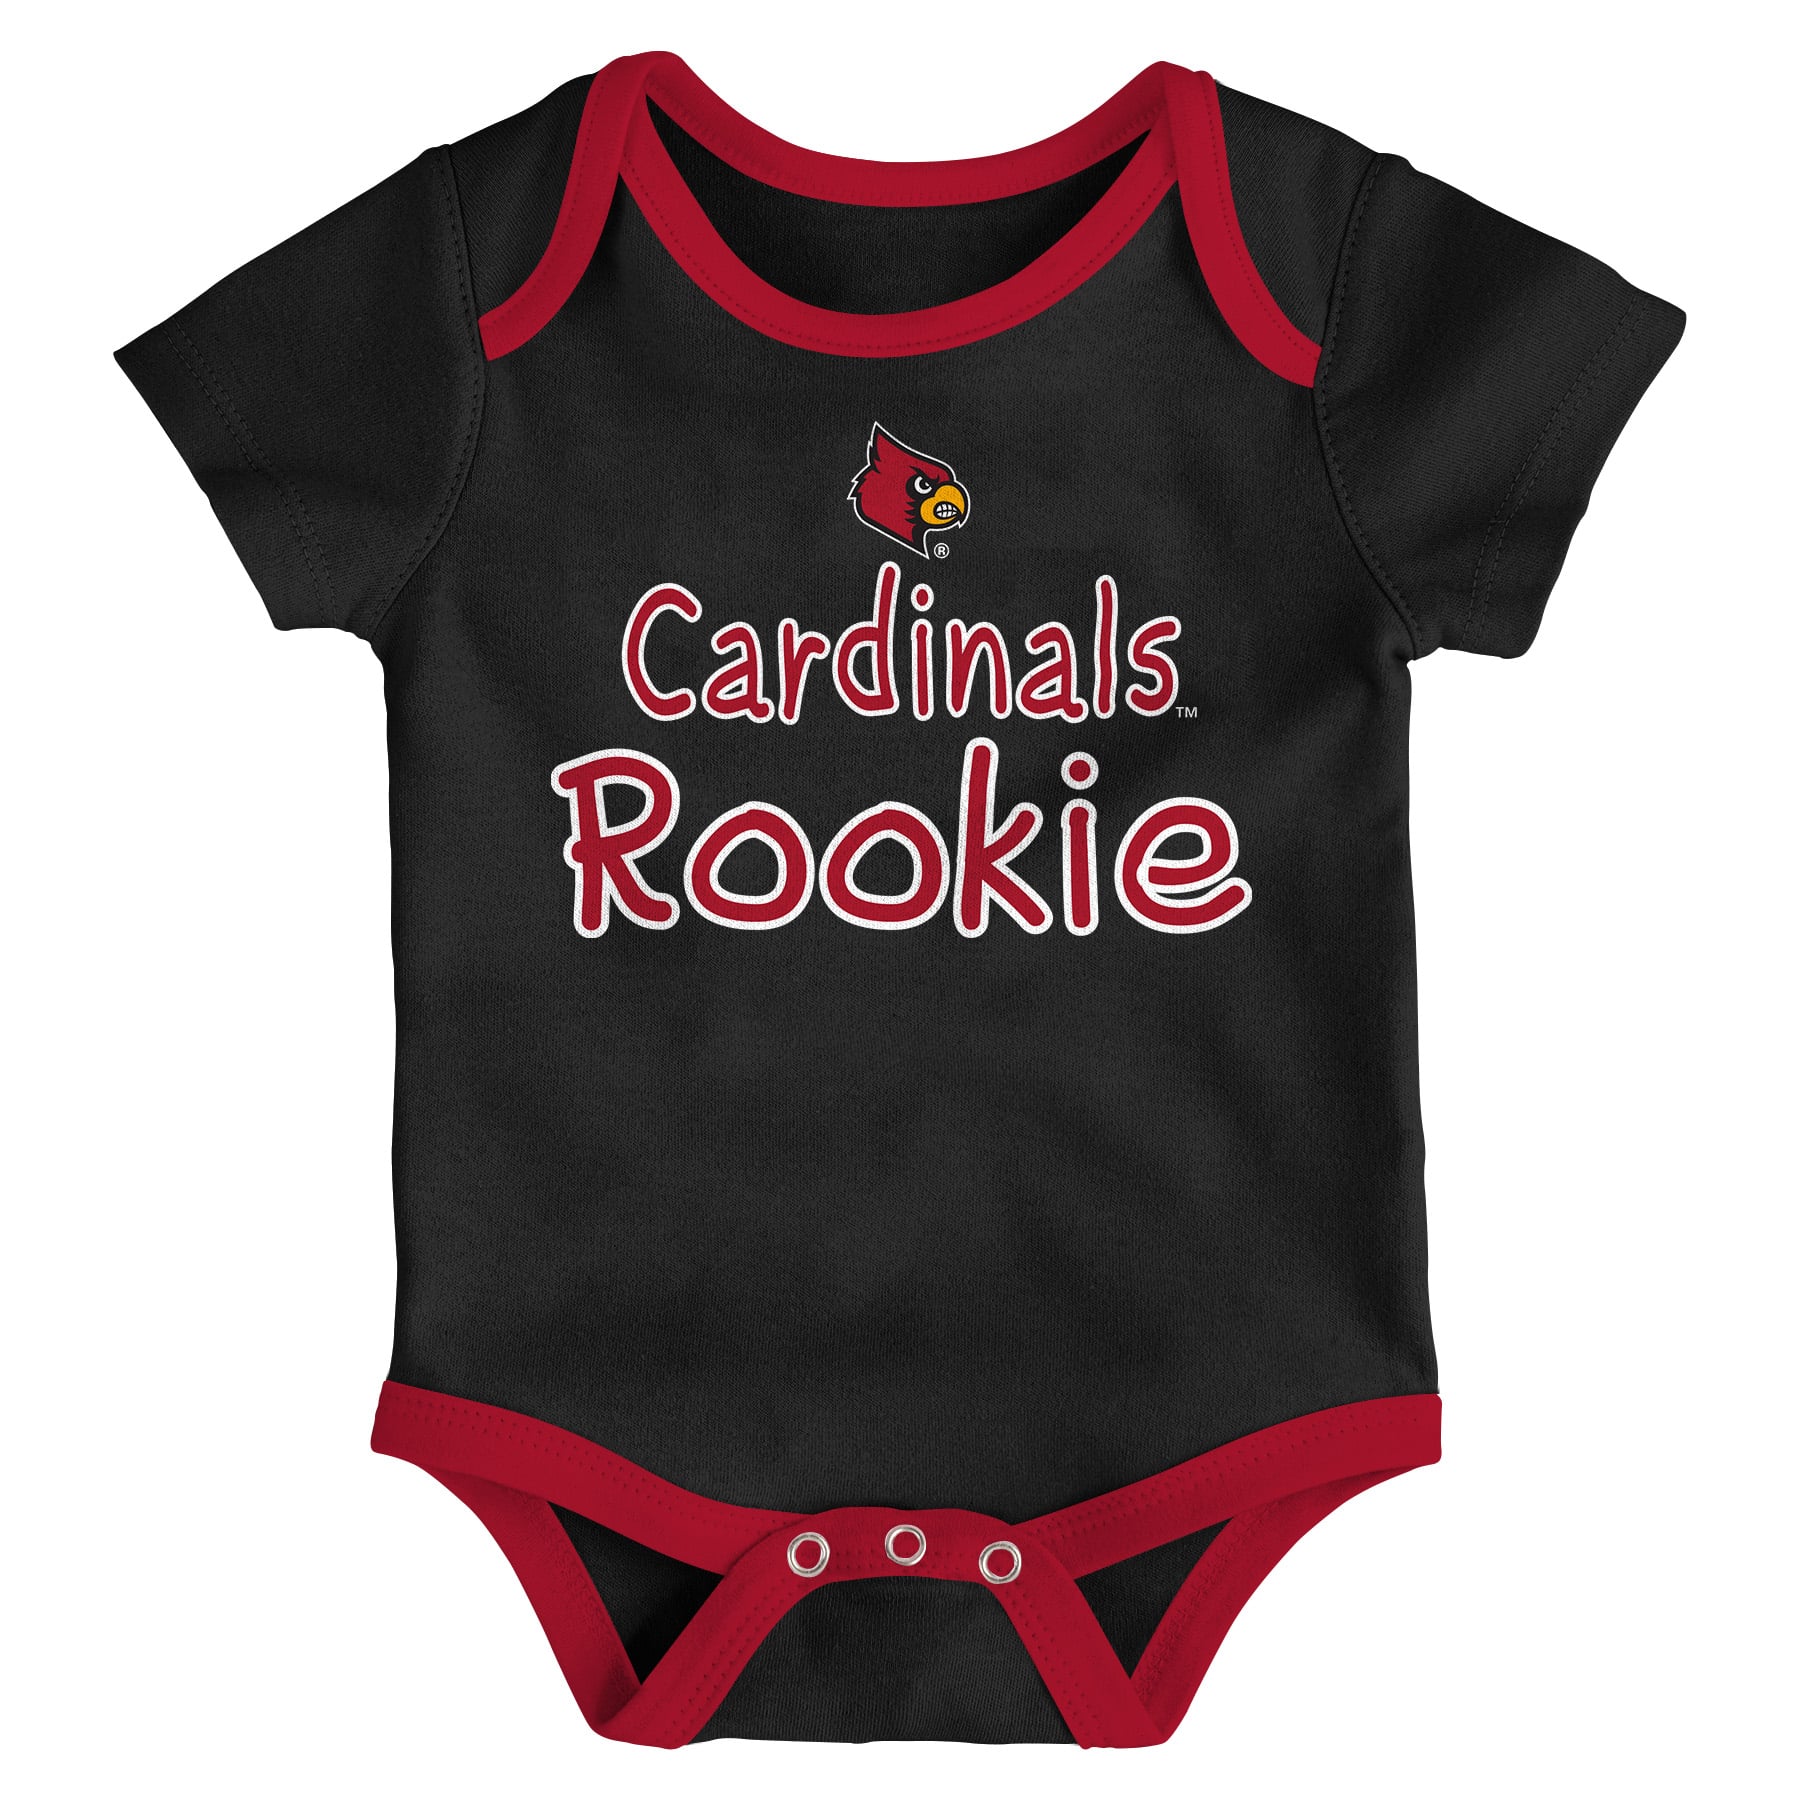 Infant Louisville Cardinals Creeper Set Baby Snapsuit Set